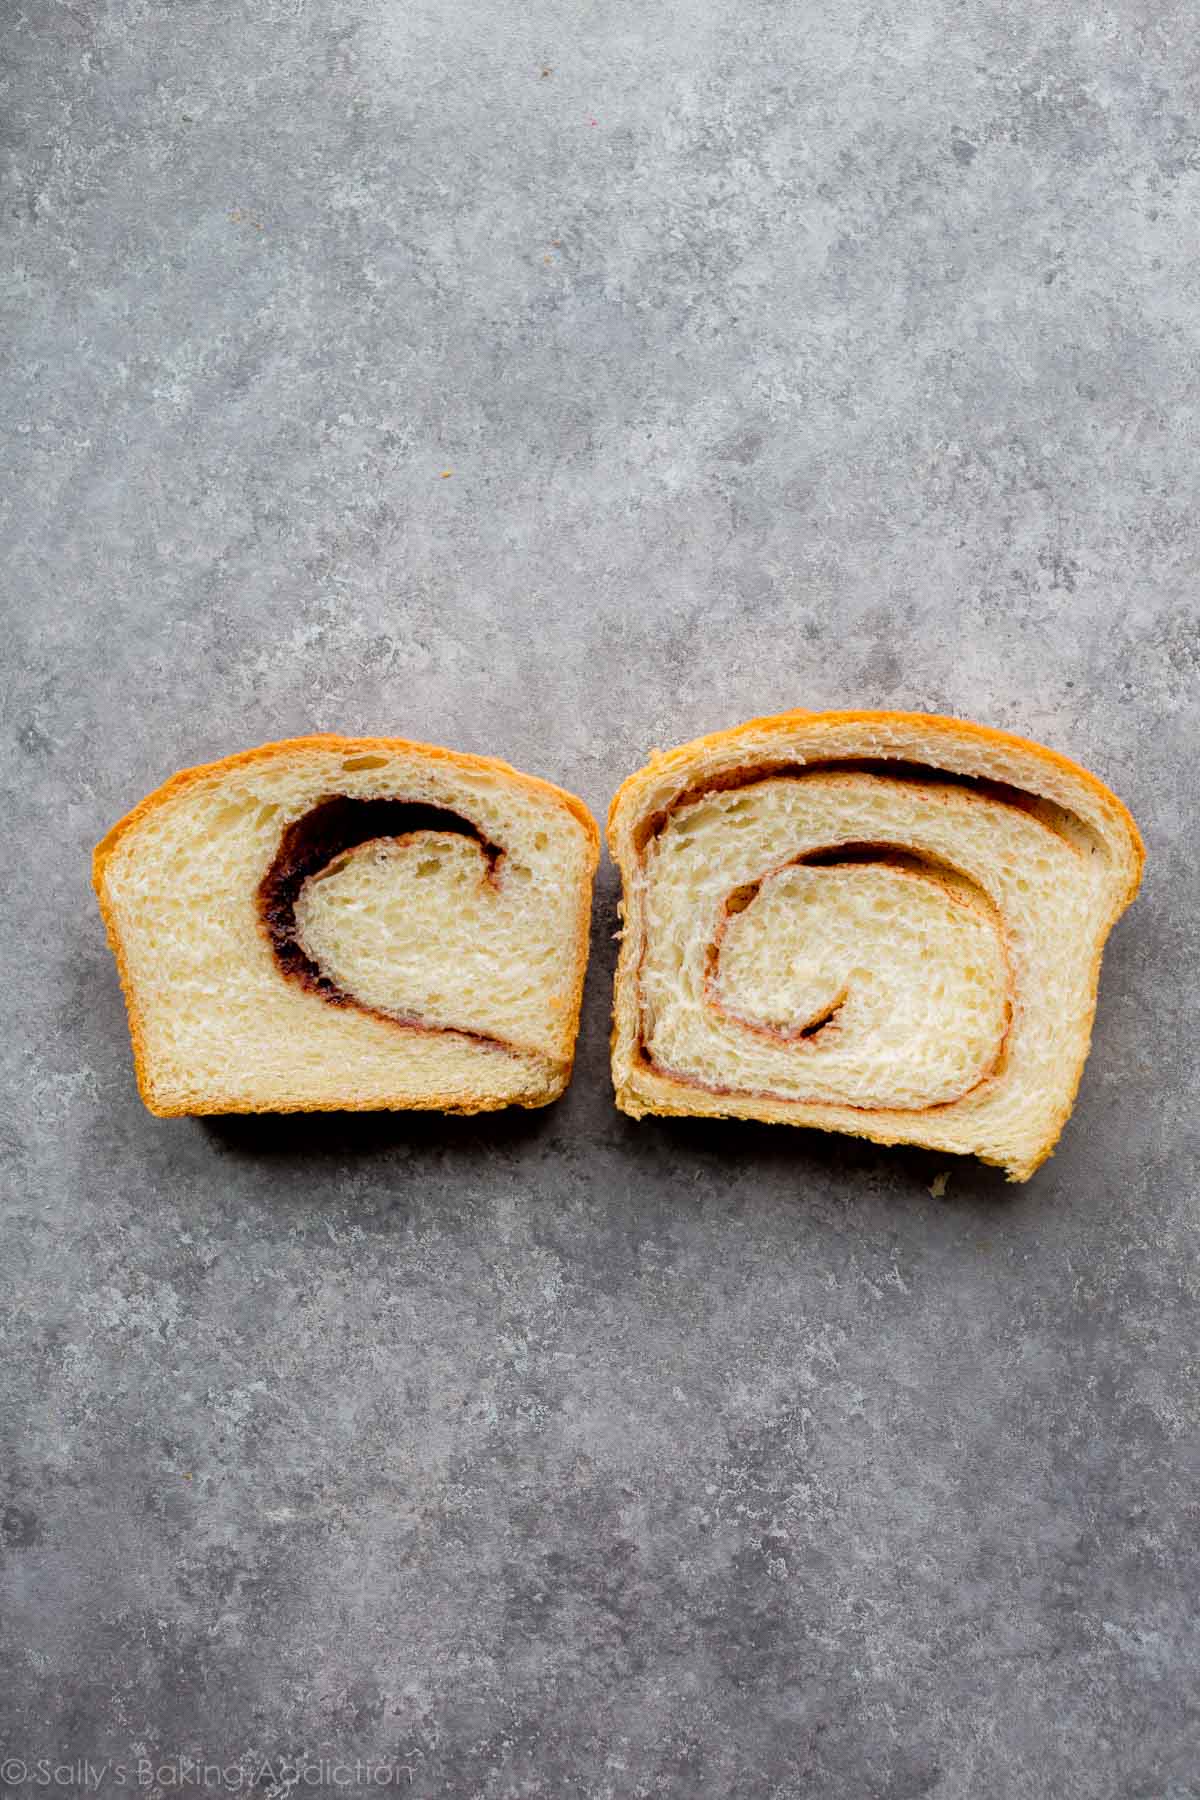 2 slices of cinnamon swirl bread